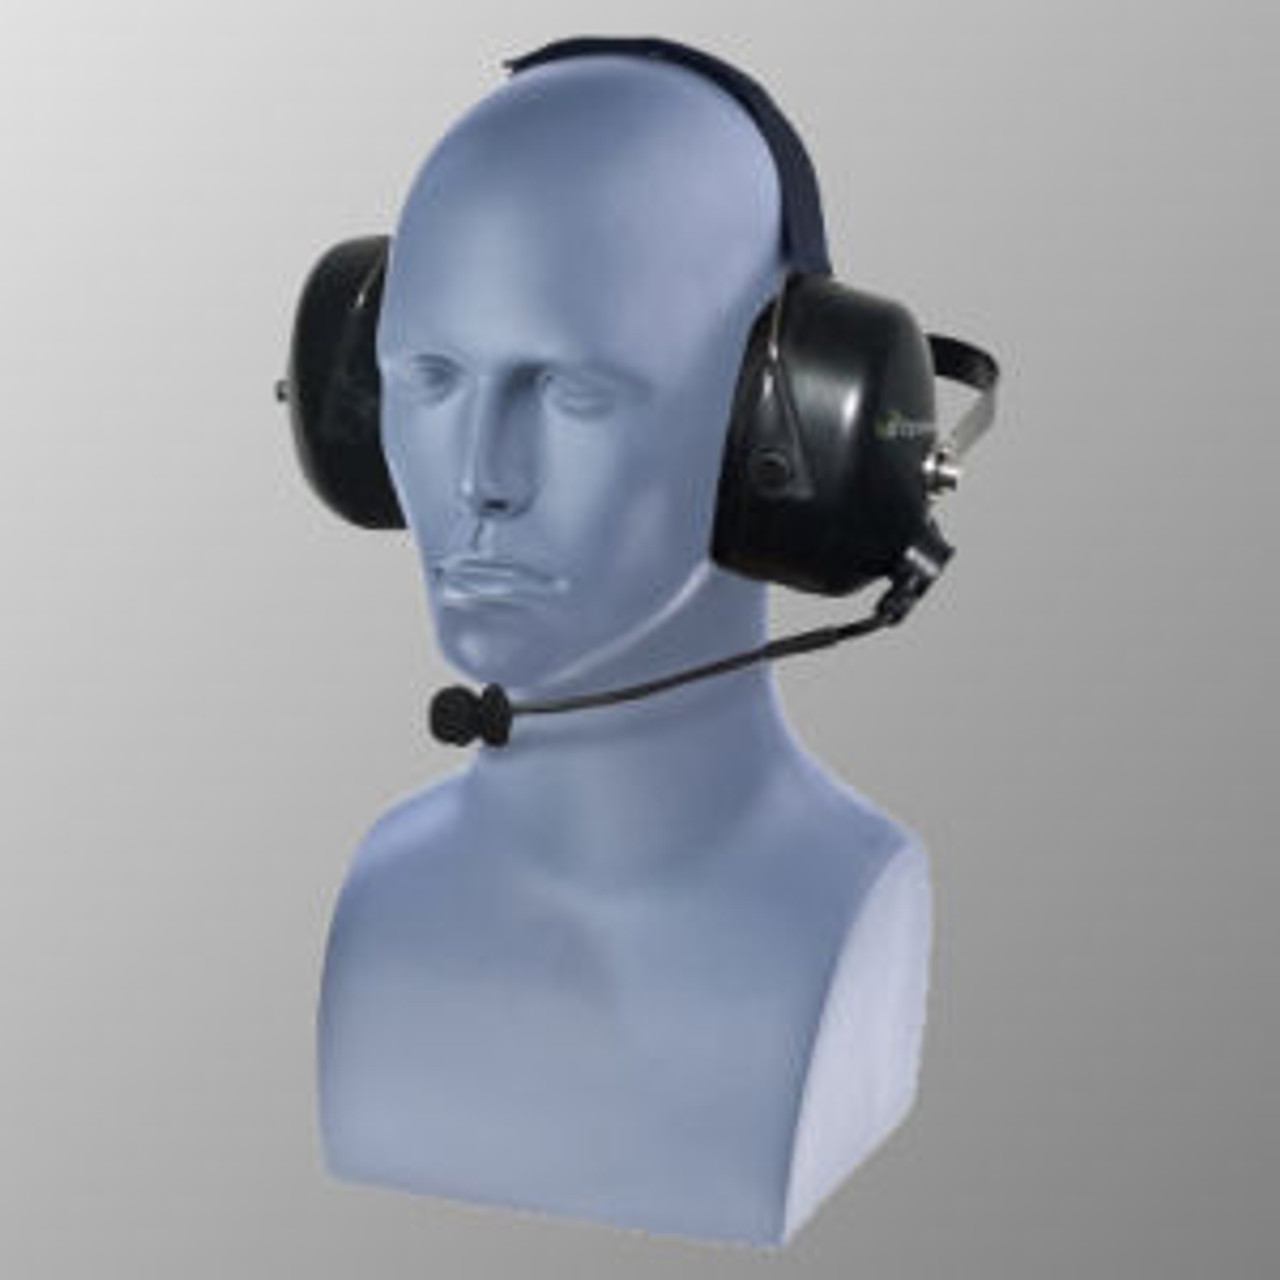 EF Johnson VP5430 Noise Canceling Wireless PTT Double Muff Behind The Head Headset